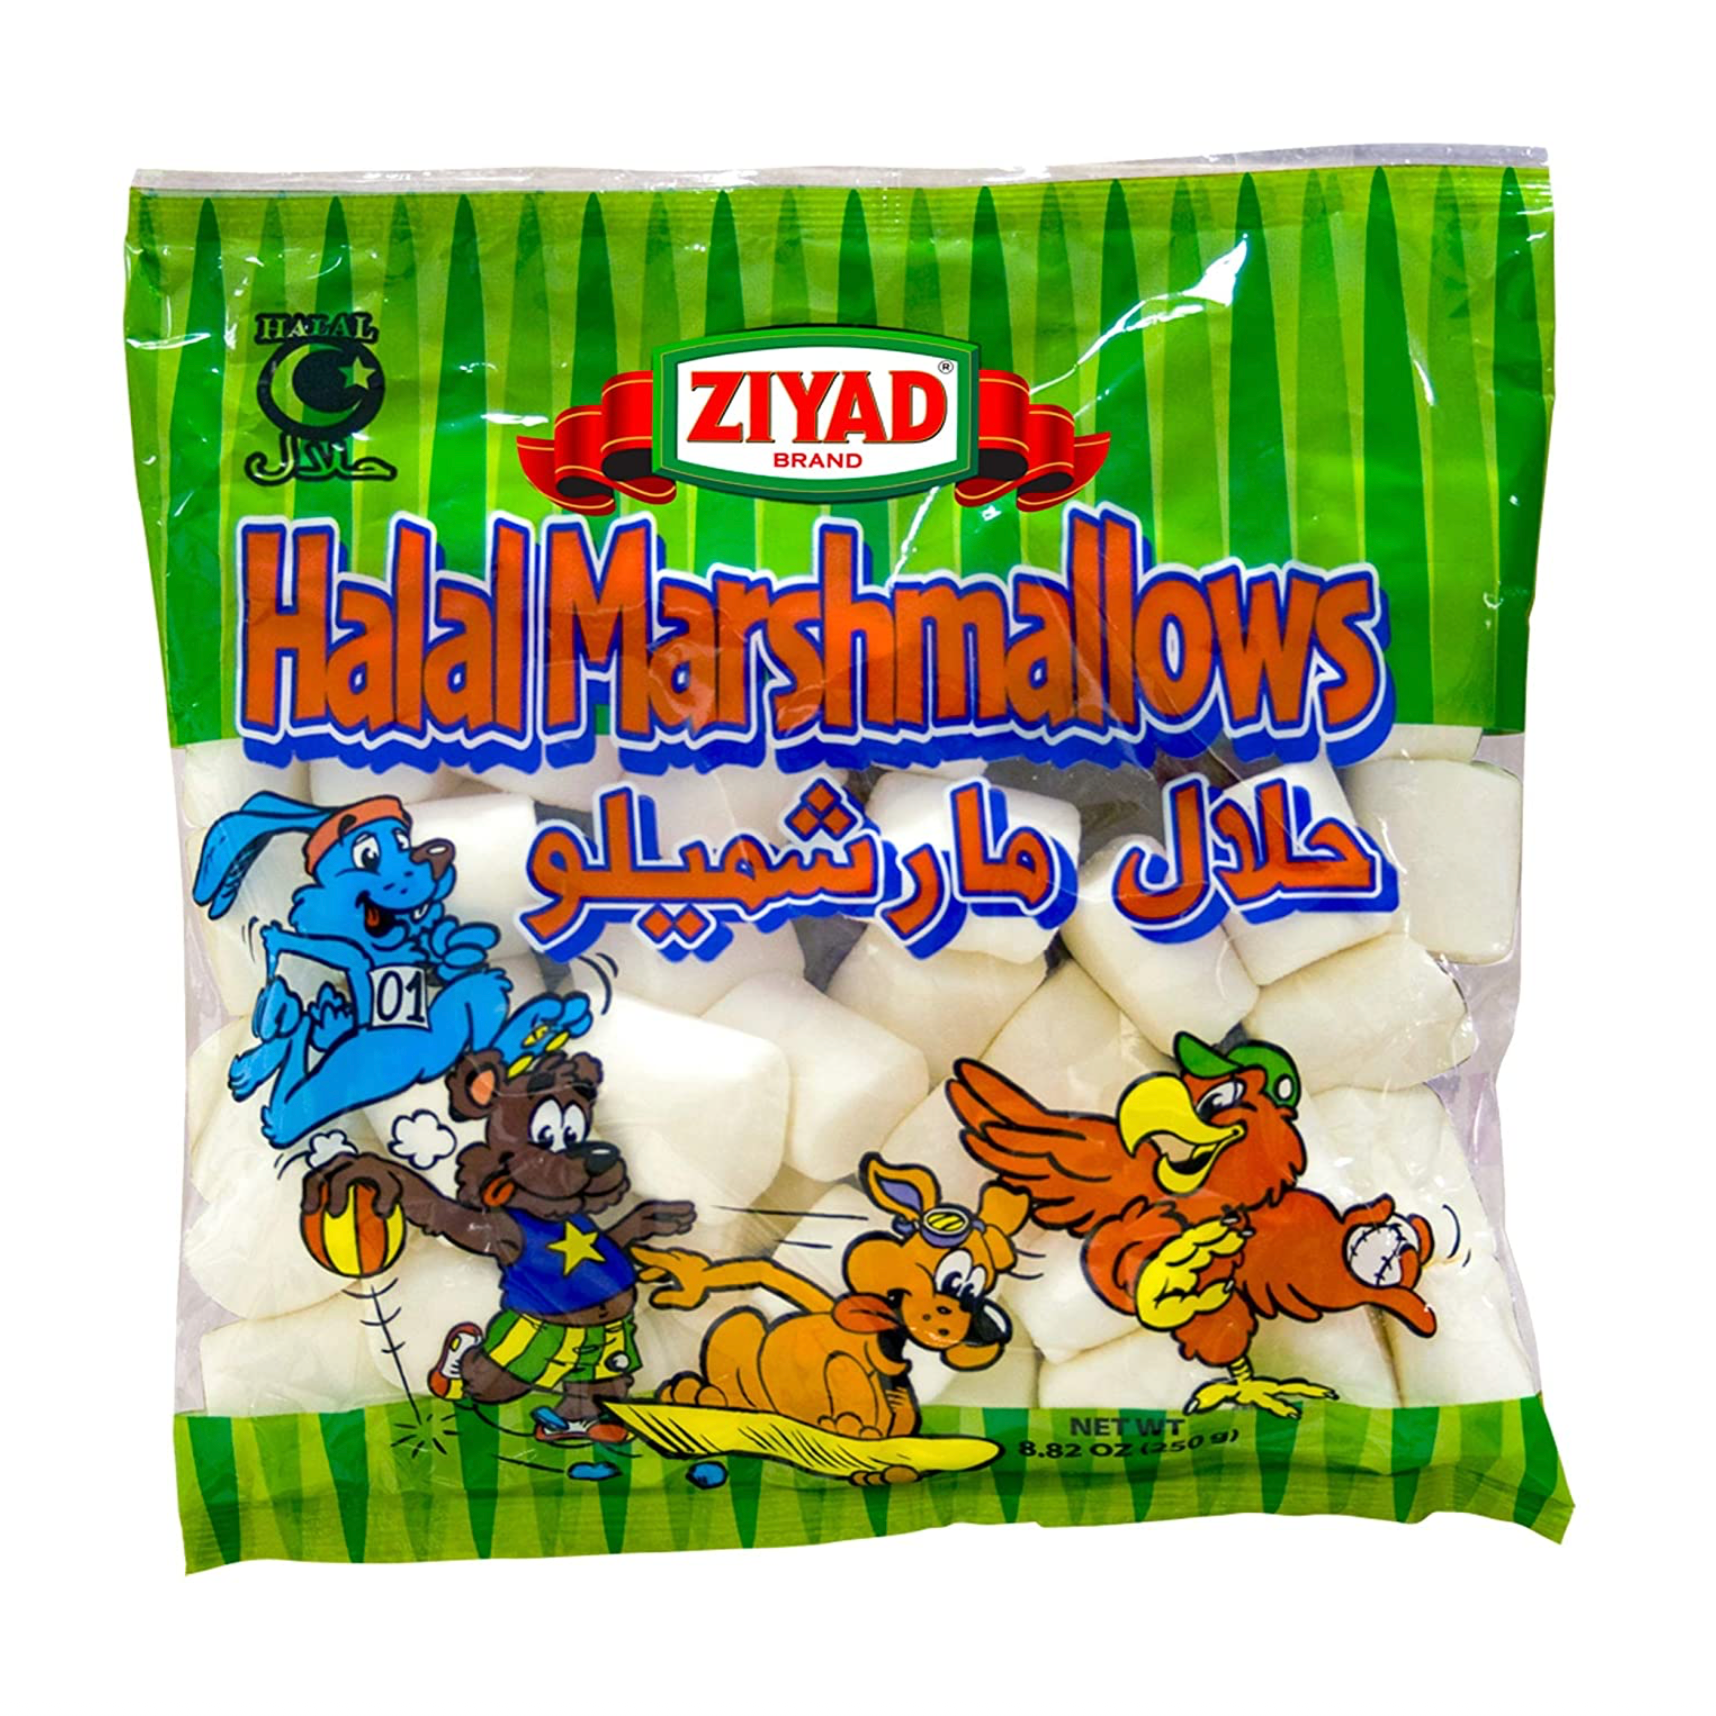 Ziyad Halal Gourmet Full Size Marshmallows